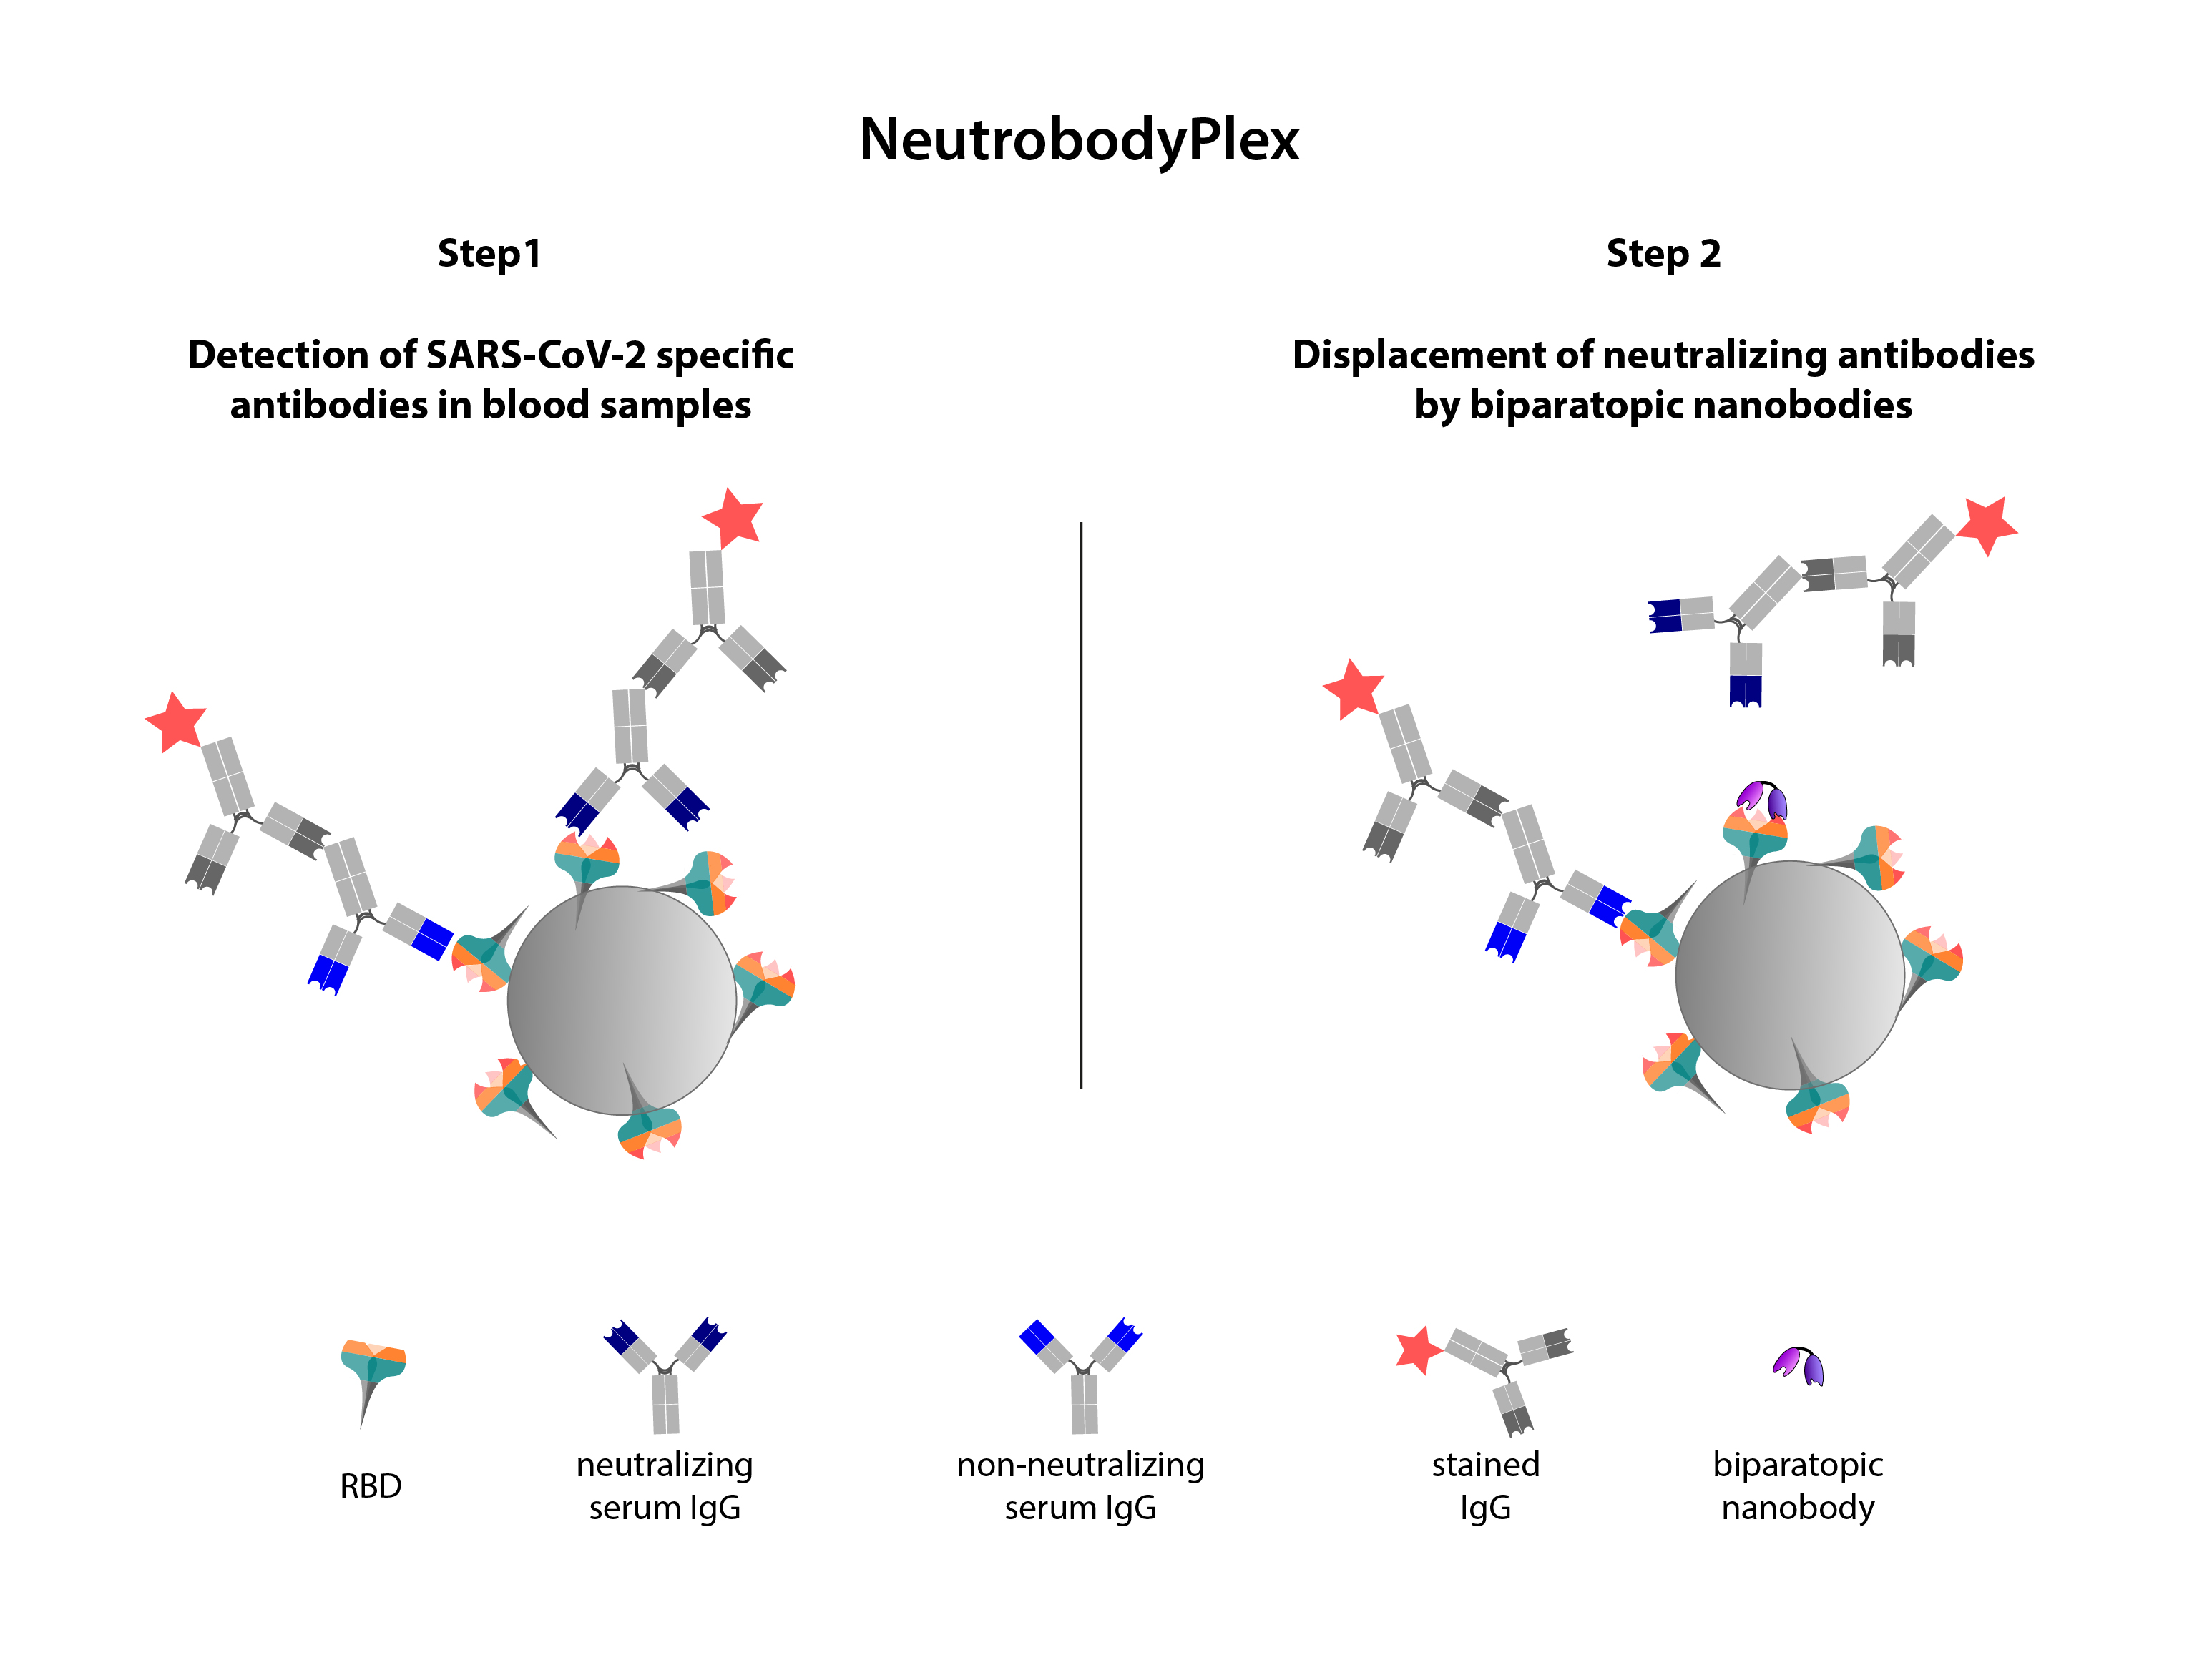 Schematic representation of how the NeutrobodyPlex works.